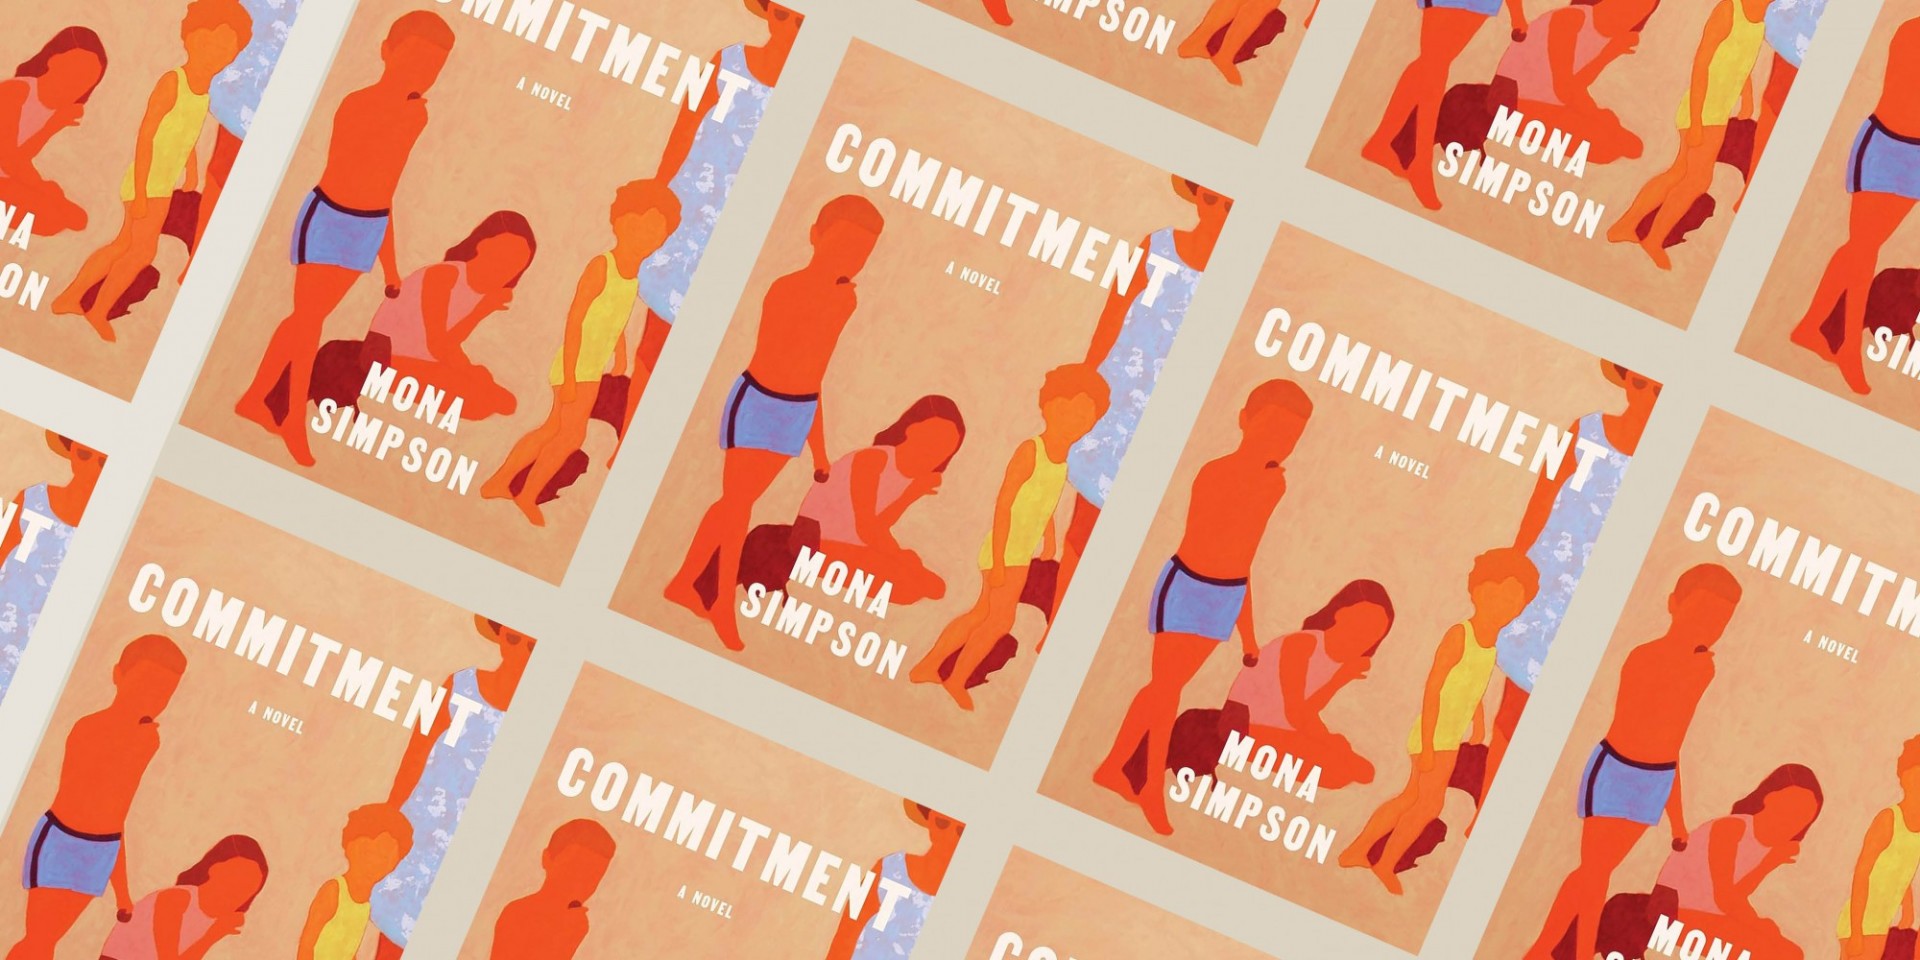 Mona Simpson The Commitment book cover